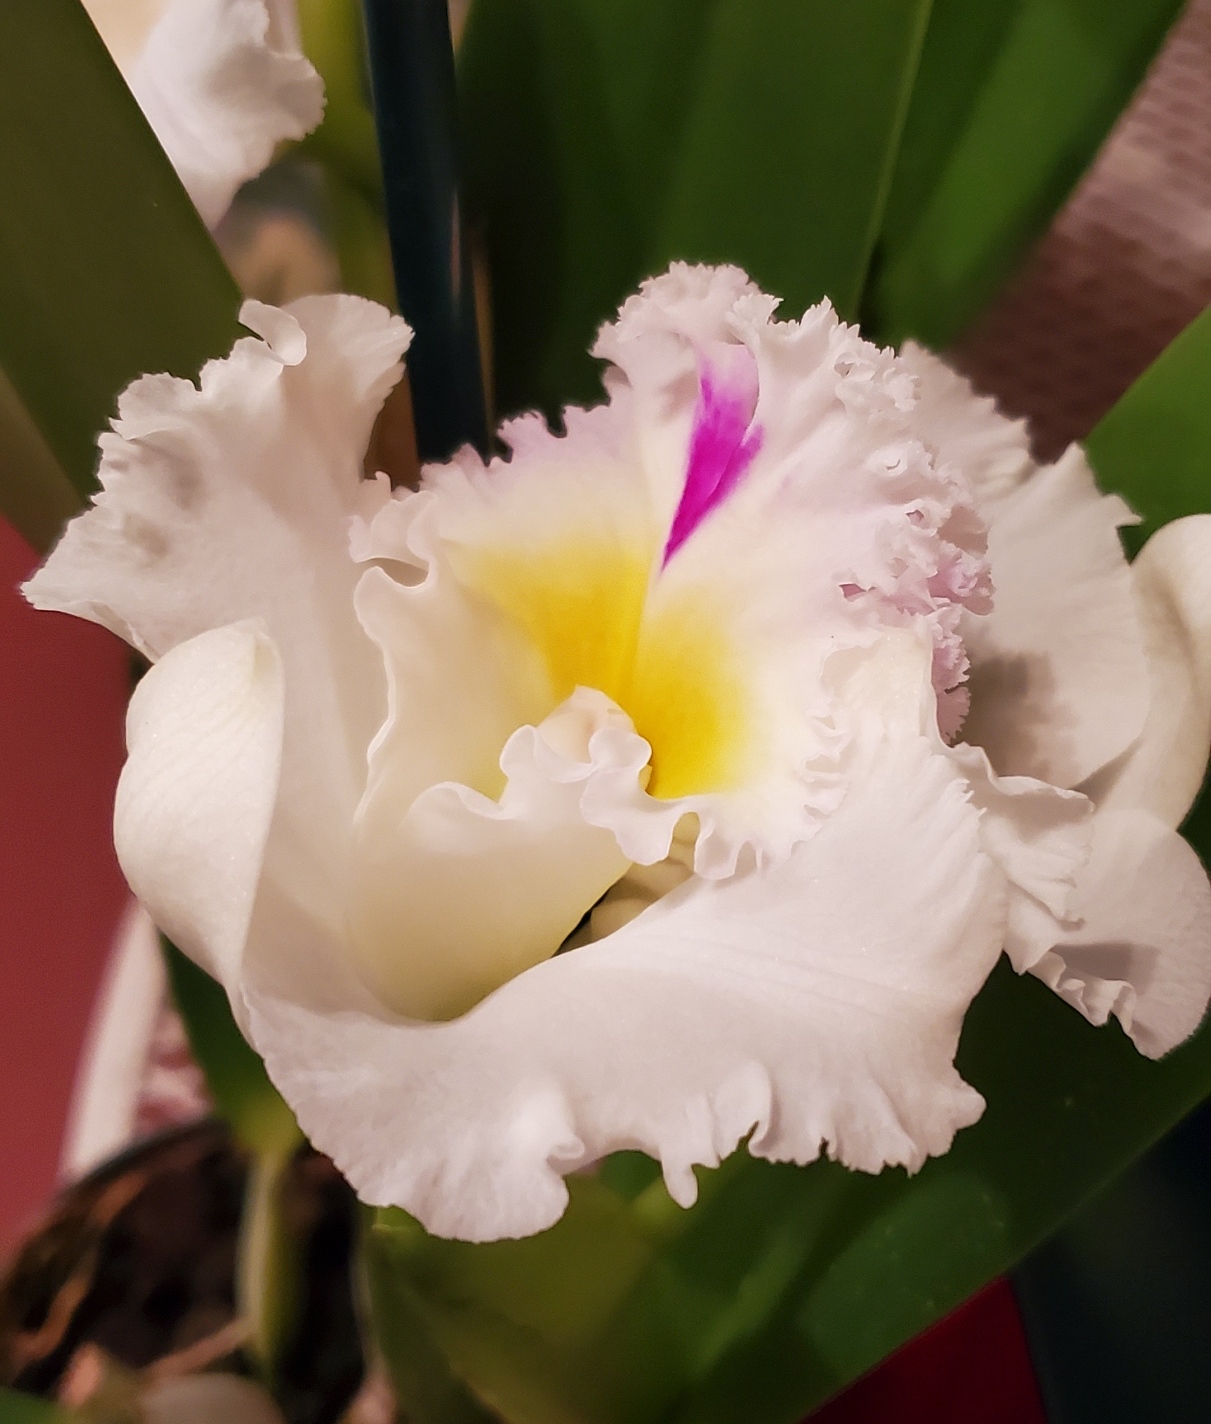 Cattleya orchid from Hawaii